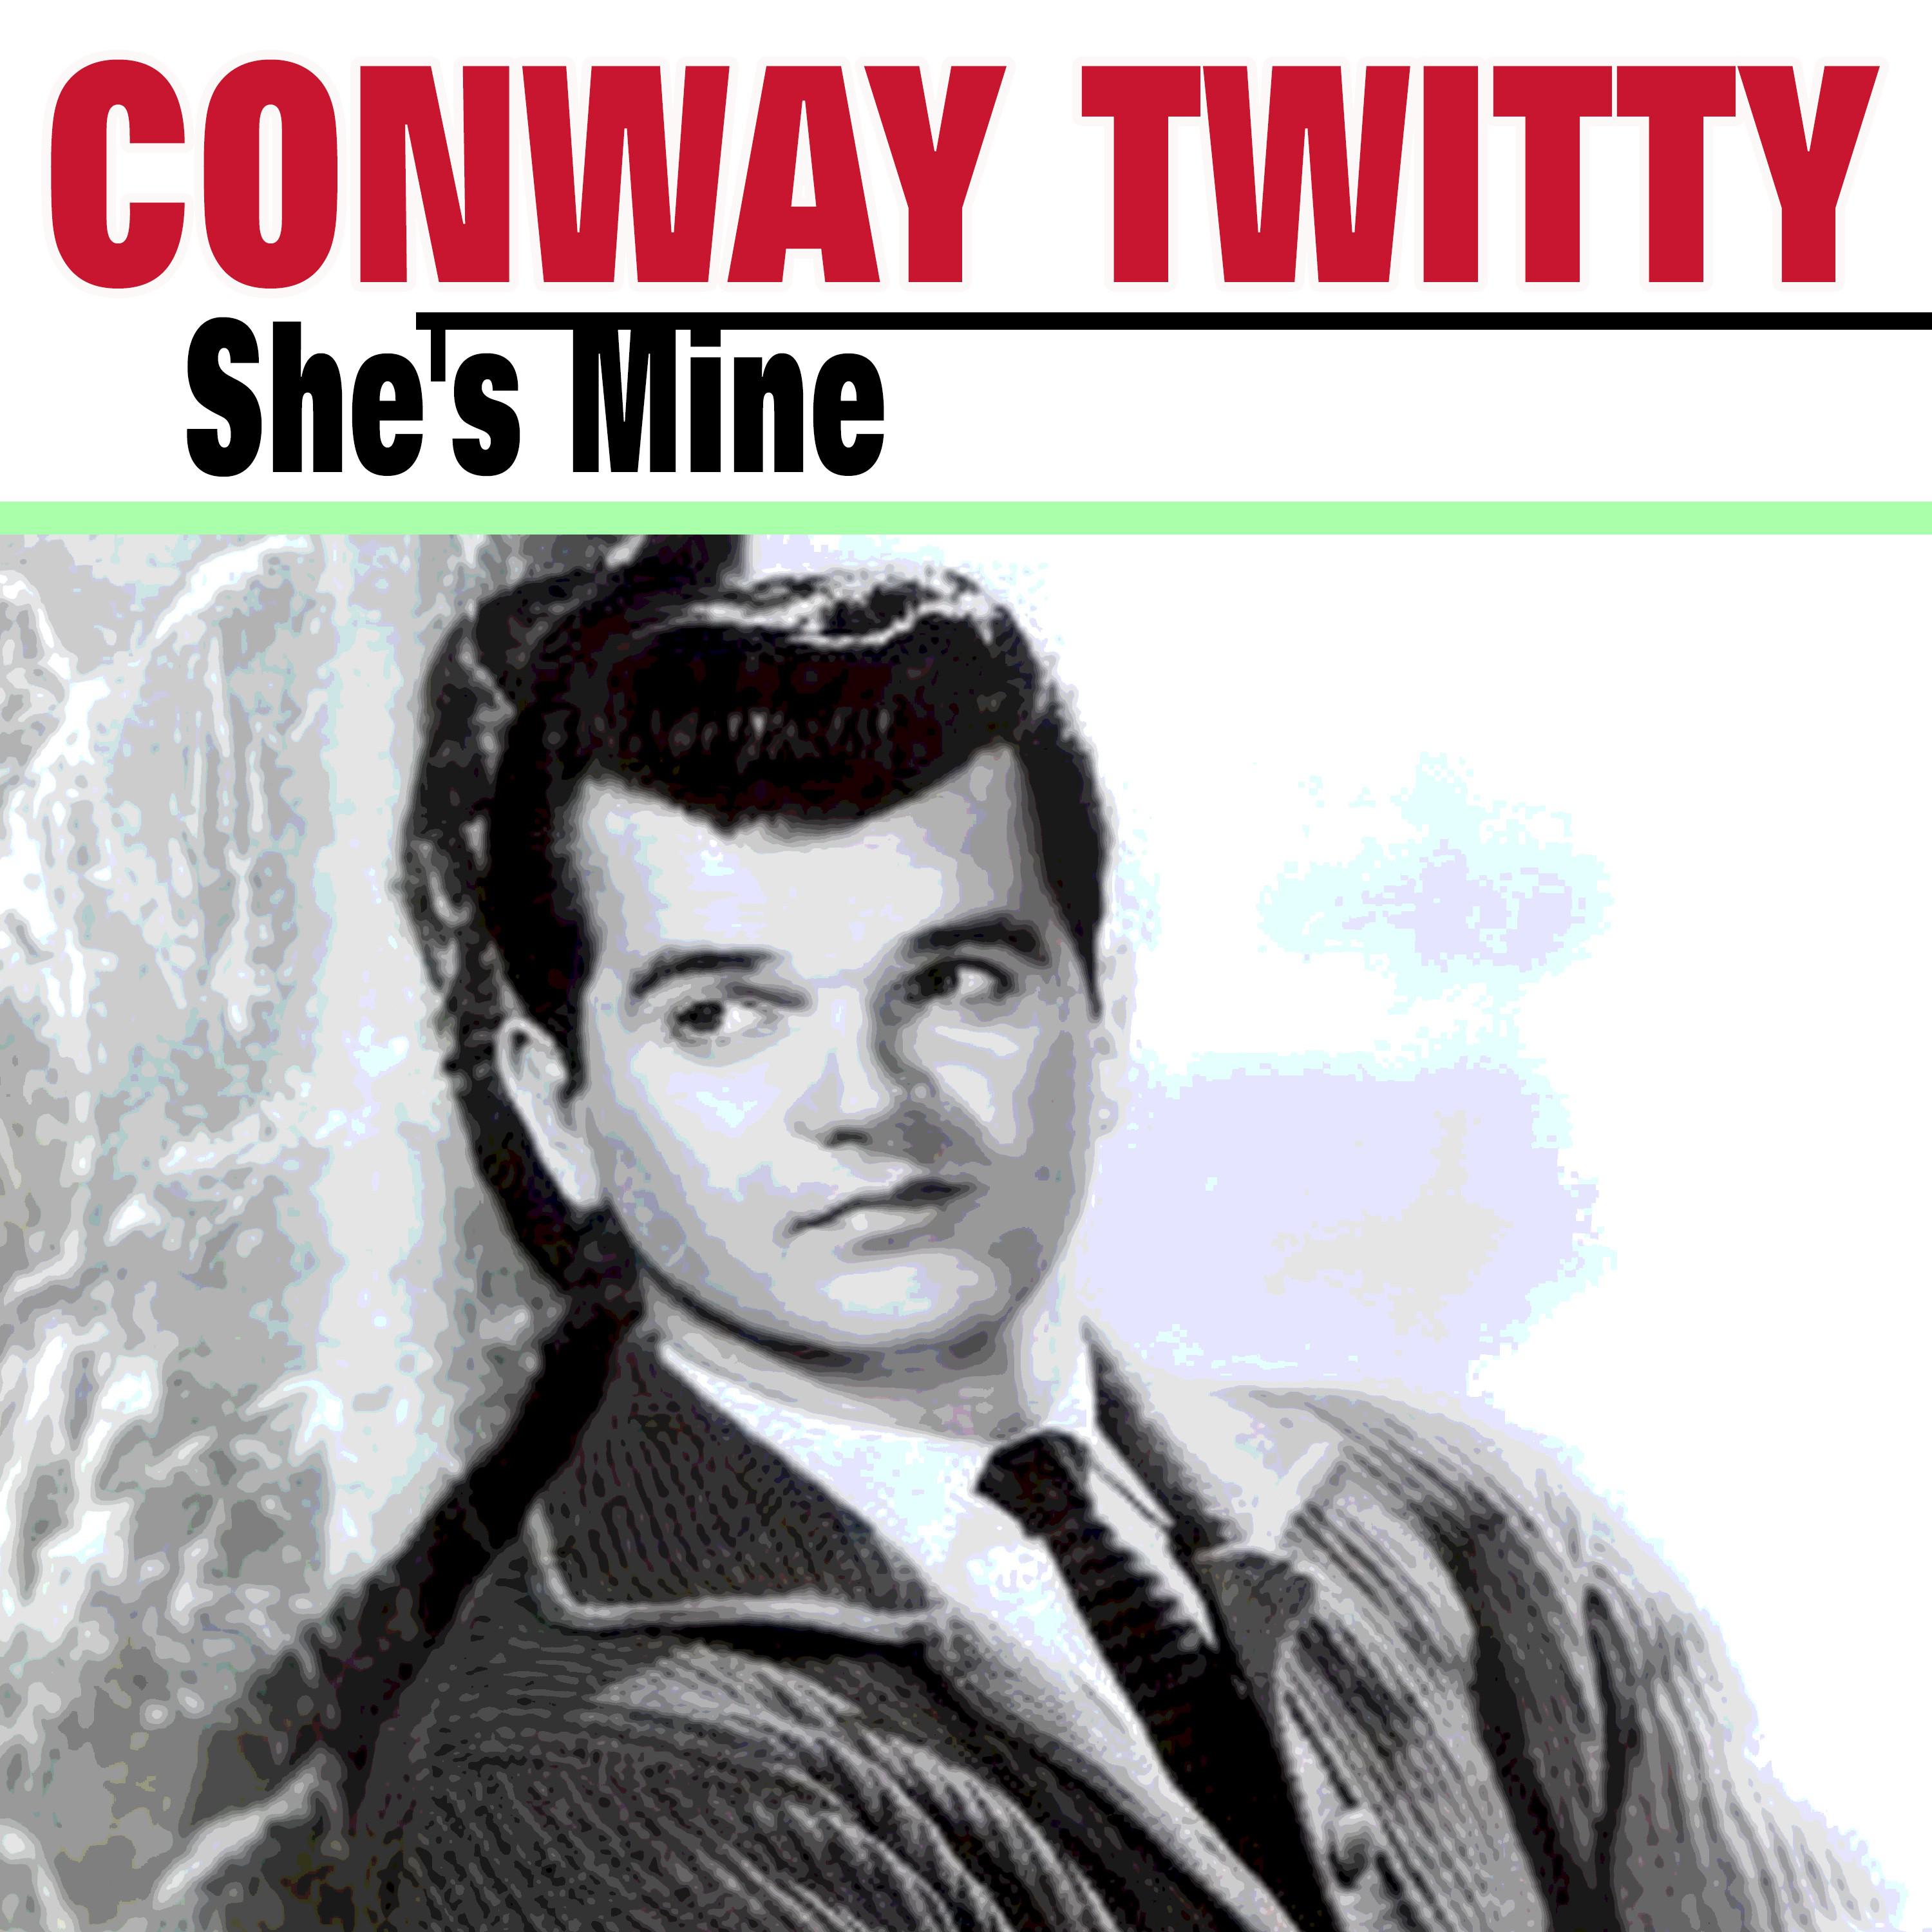 歌曲名《Reastless》，由 Conway Twitty 演唱，收录于《She's Mine》专辑中.